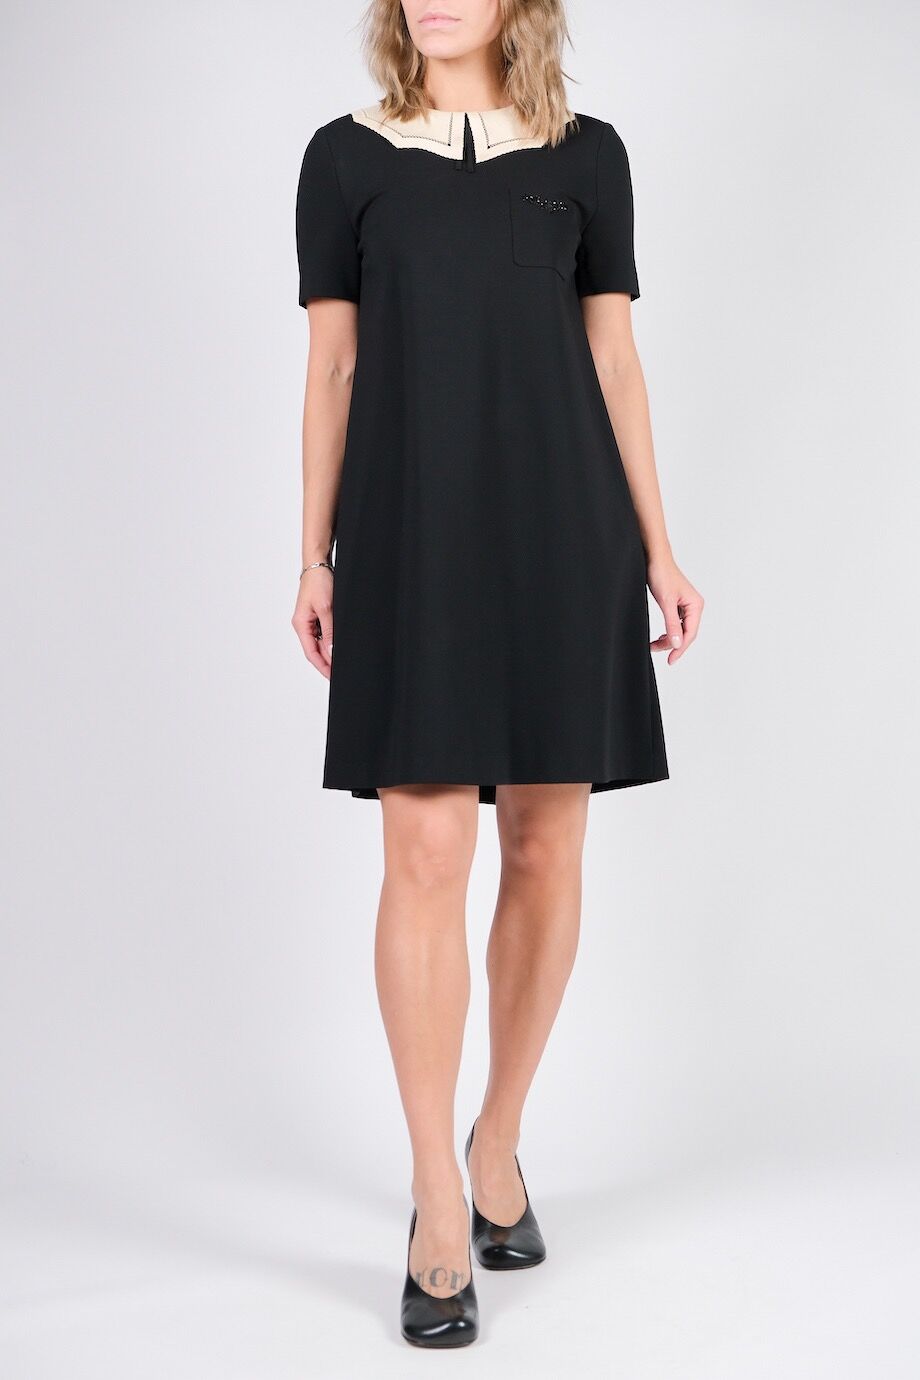 image 1 Платье чёрного цвета со светлым  воротничком